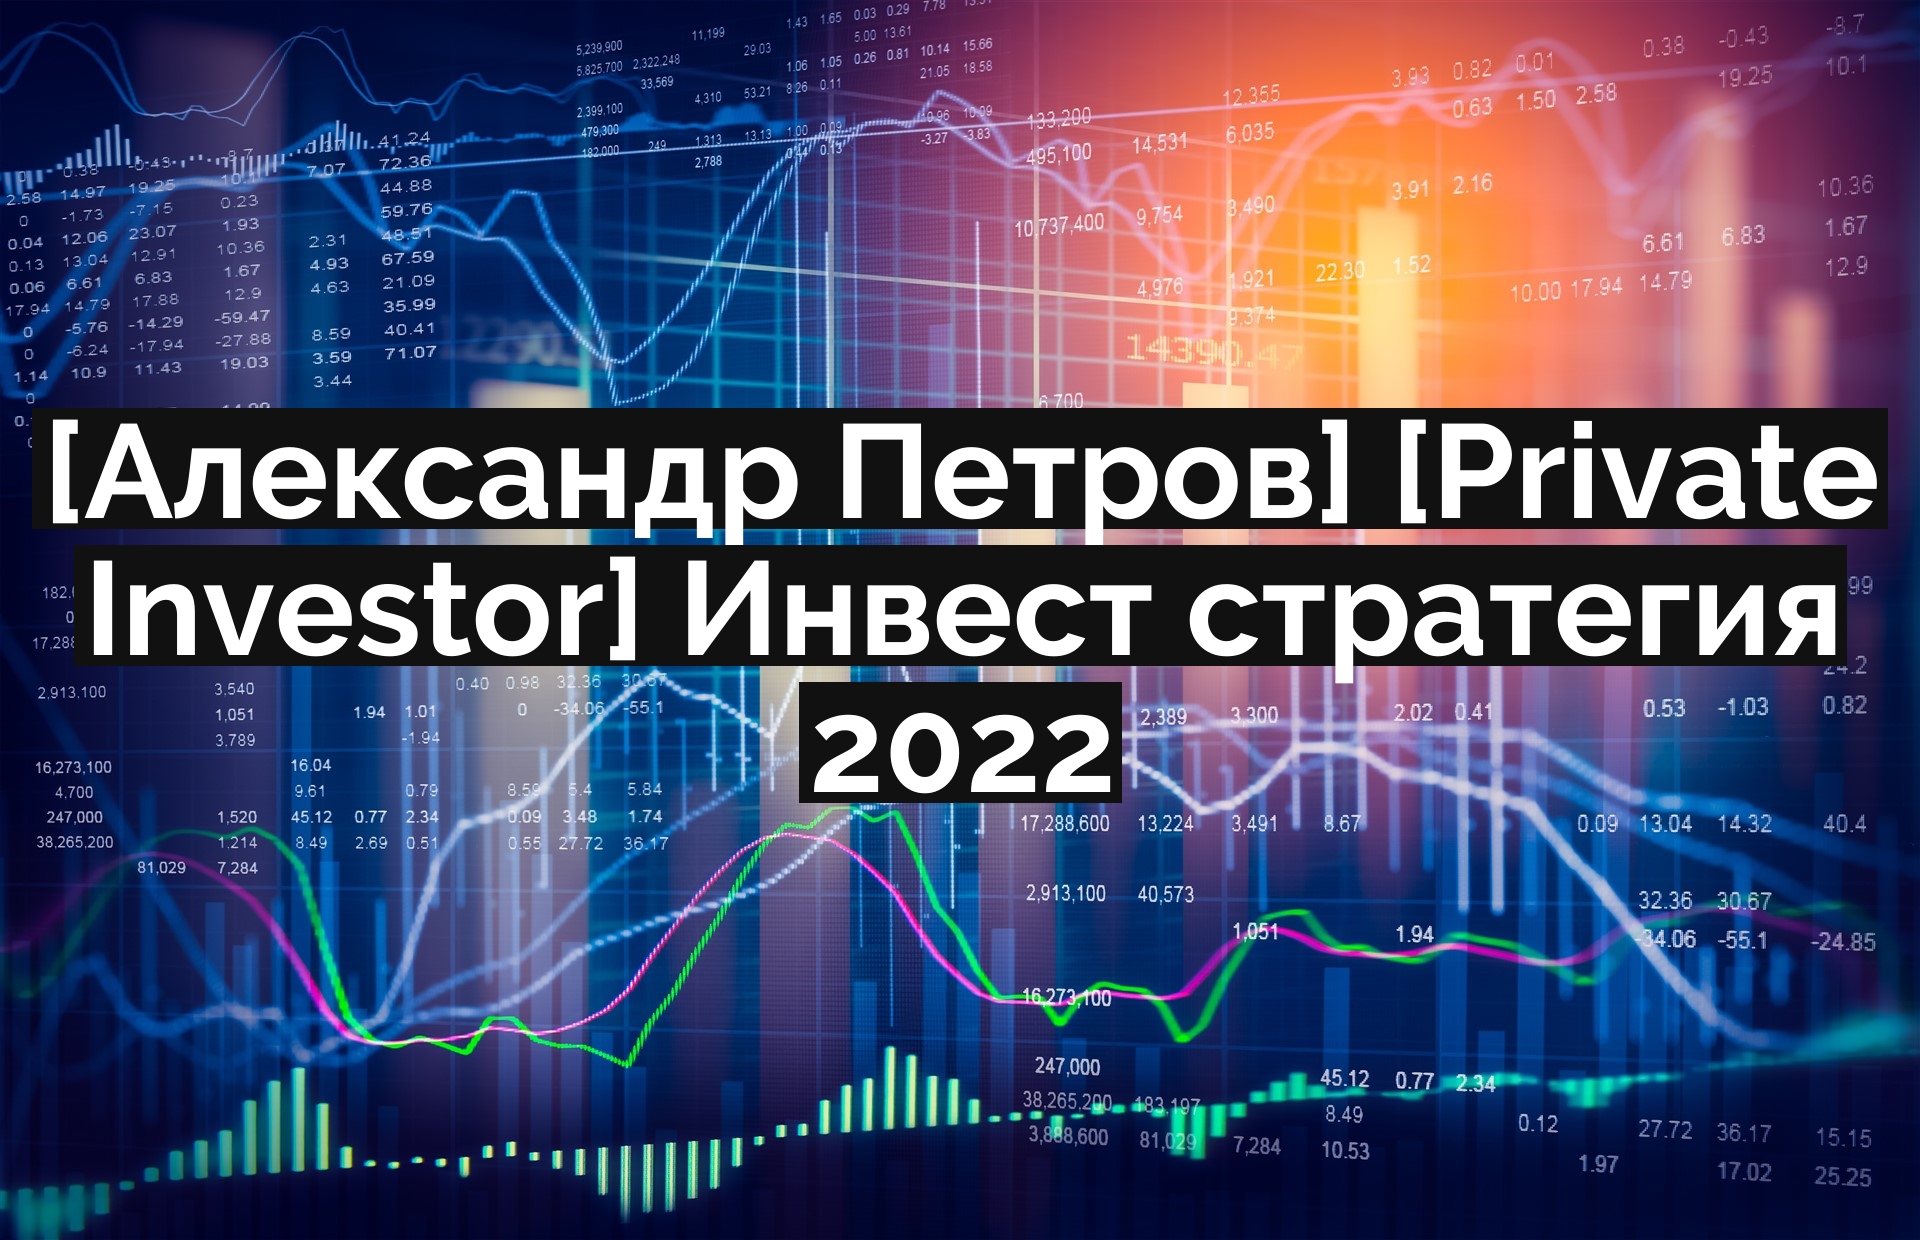 [Александр Петров] [Private Investor] Инвест стратегия 2022